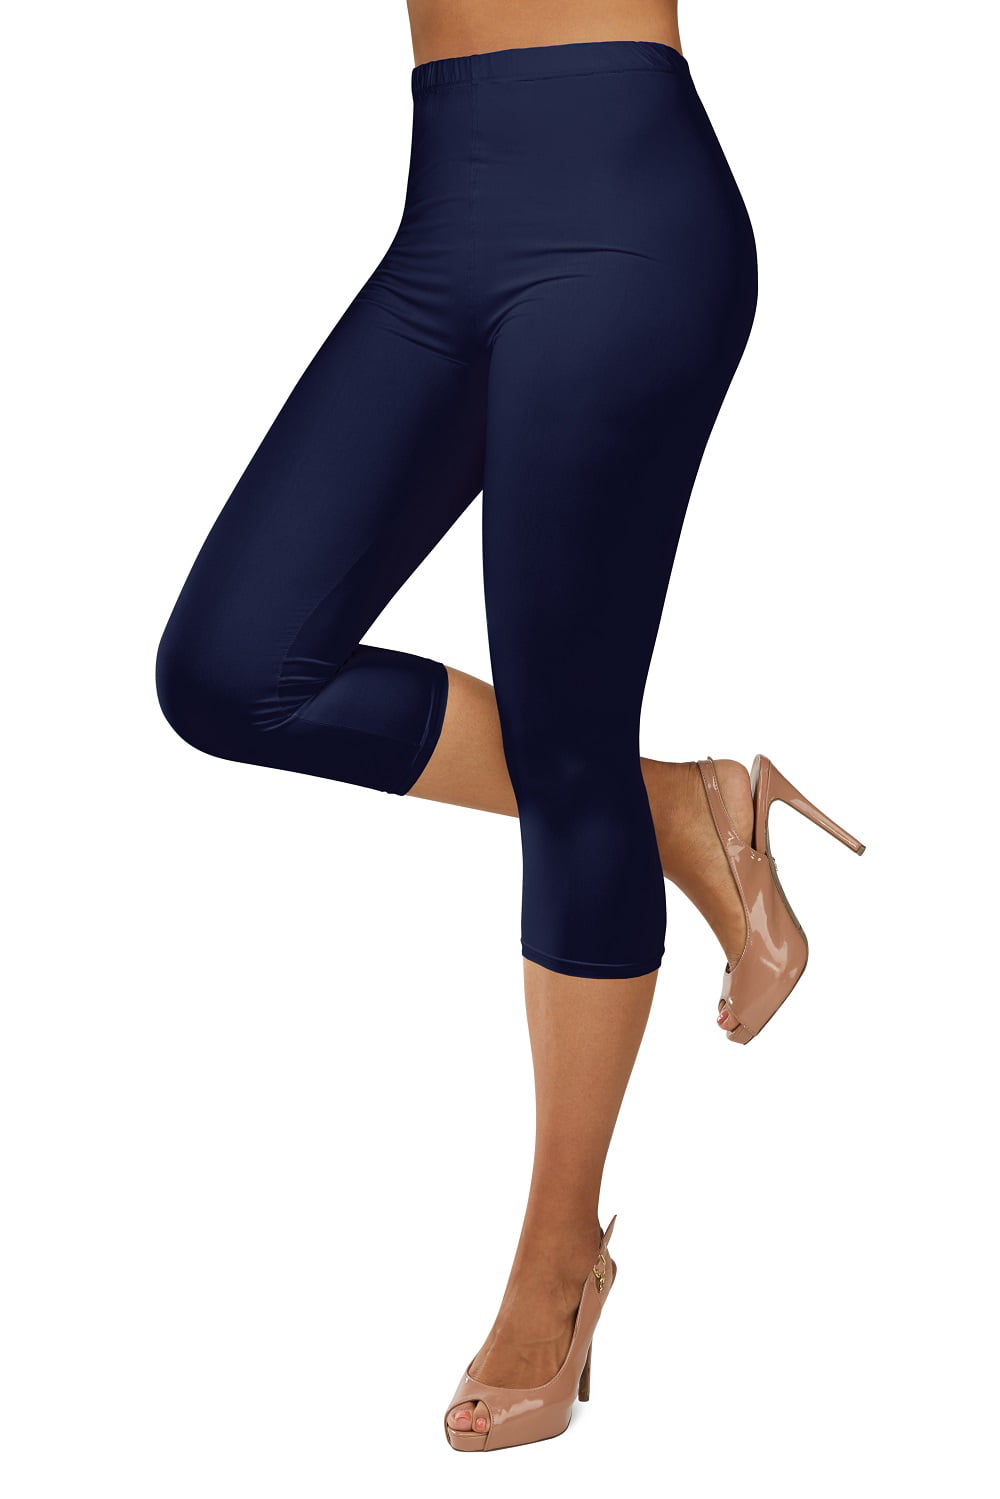 Gilbin Ultra Soft Capri High Waist Leggings for Women-Many Colors -One Size  & Plus Size (Beige 3X-5X) 